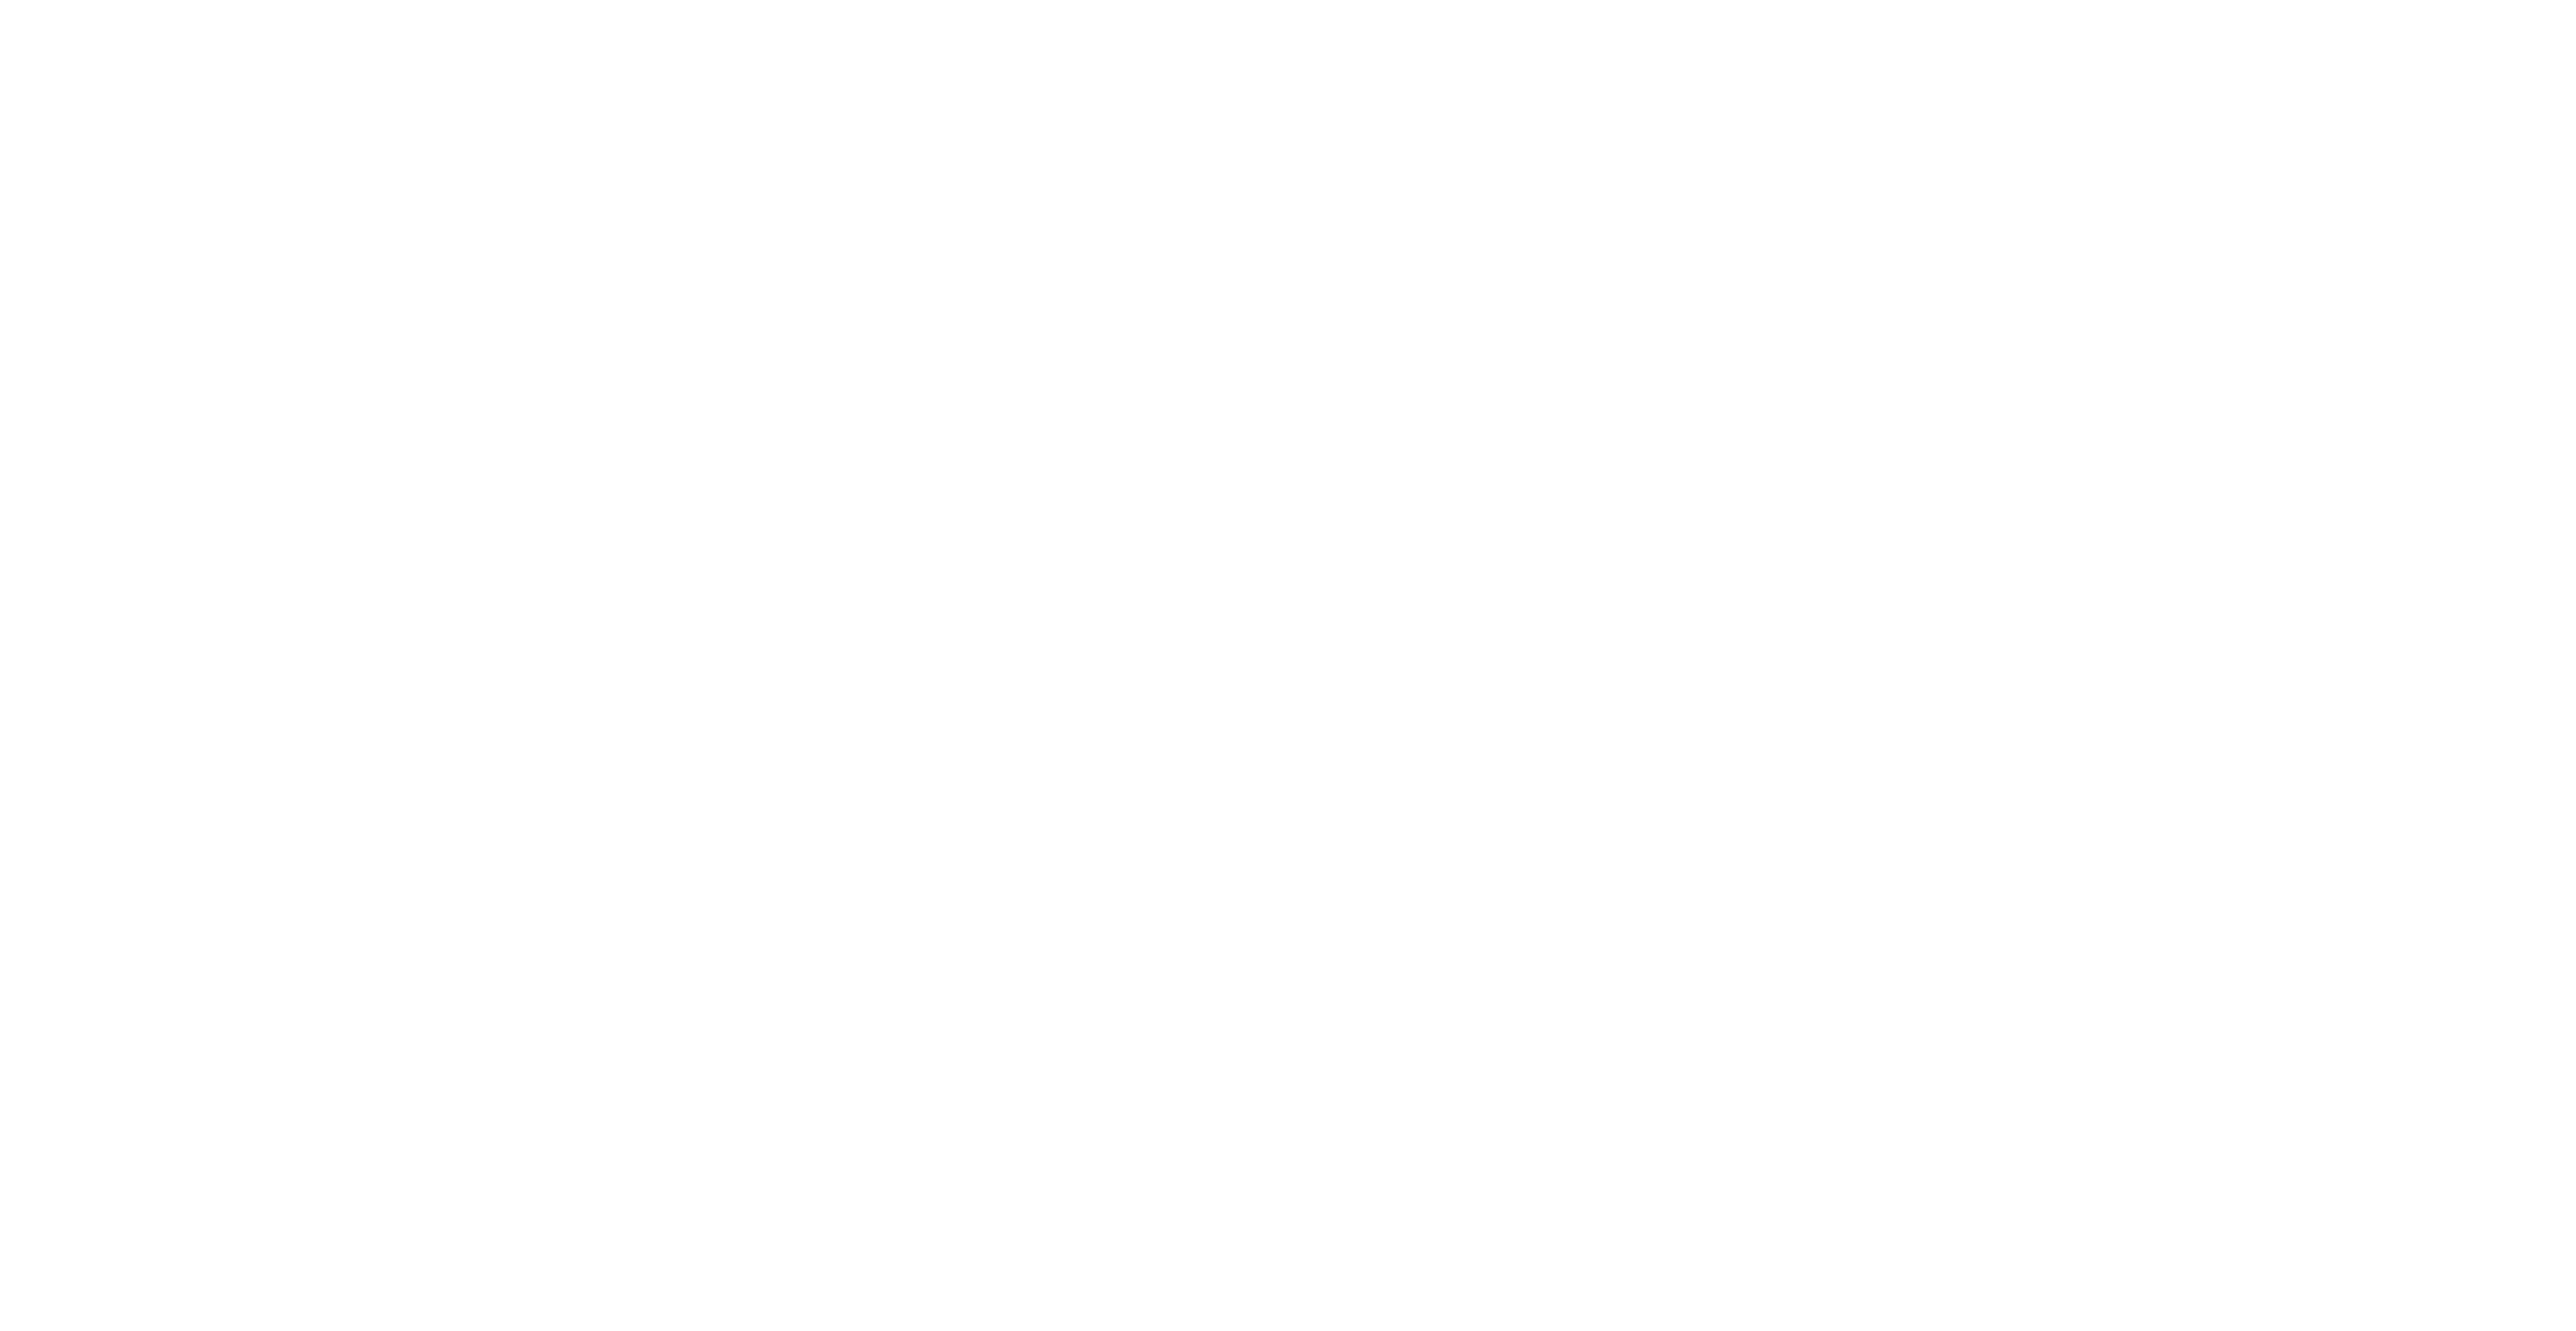 The Village Bake Shop